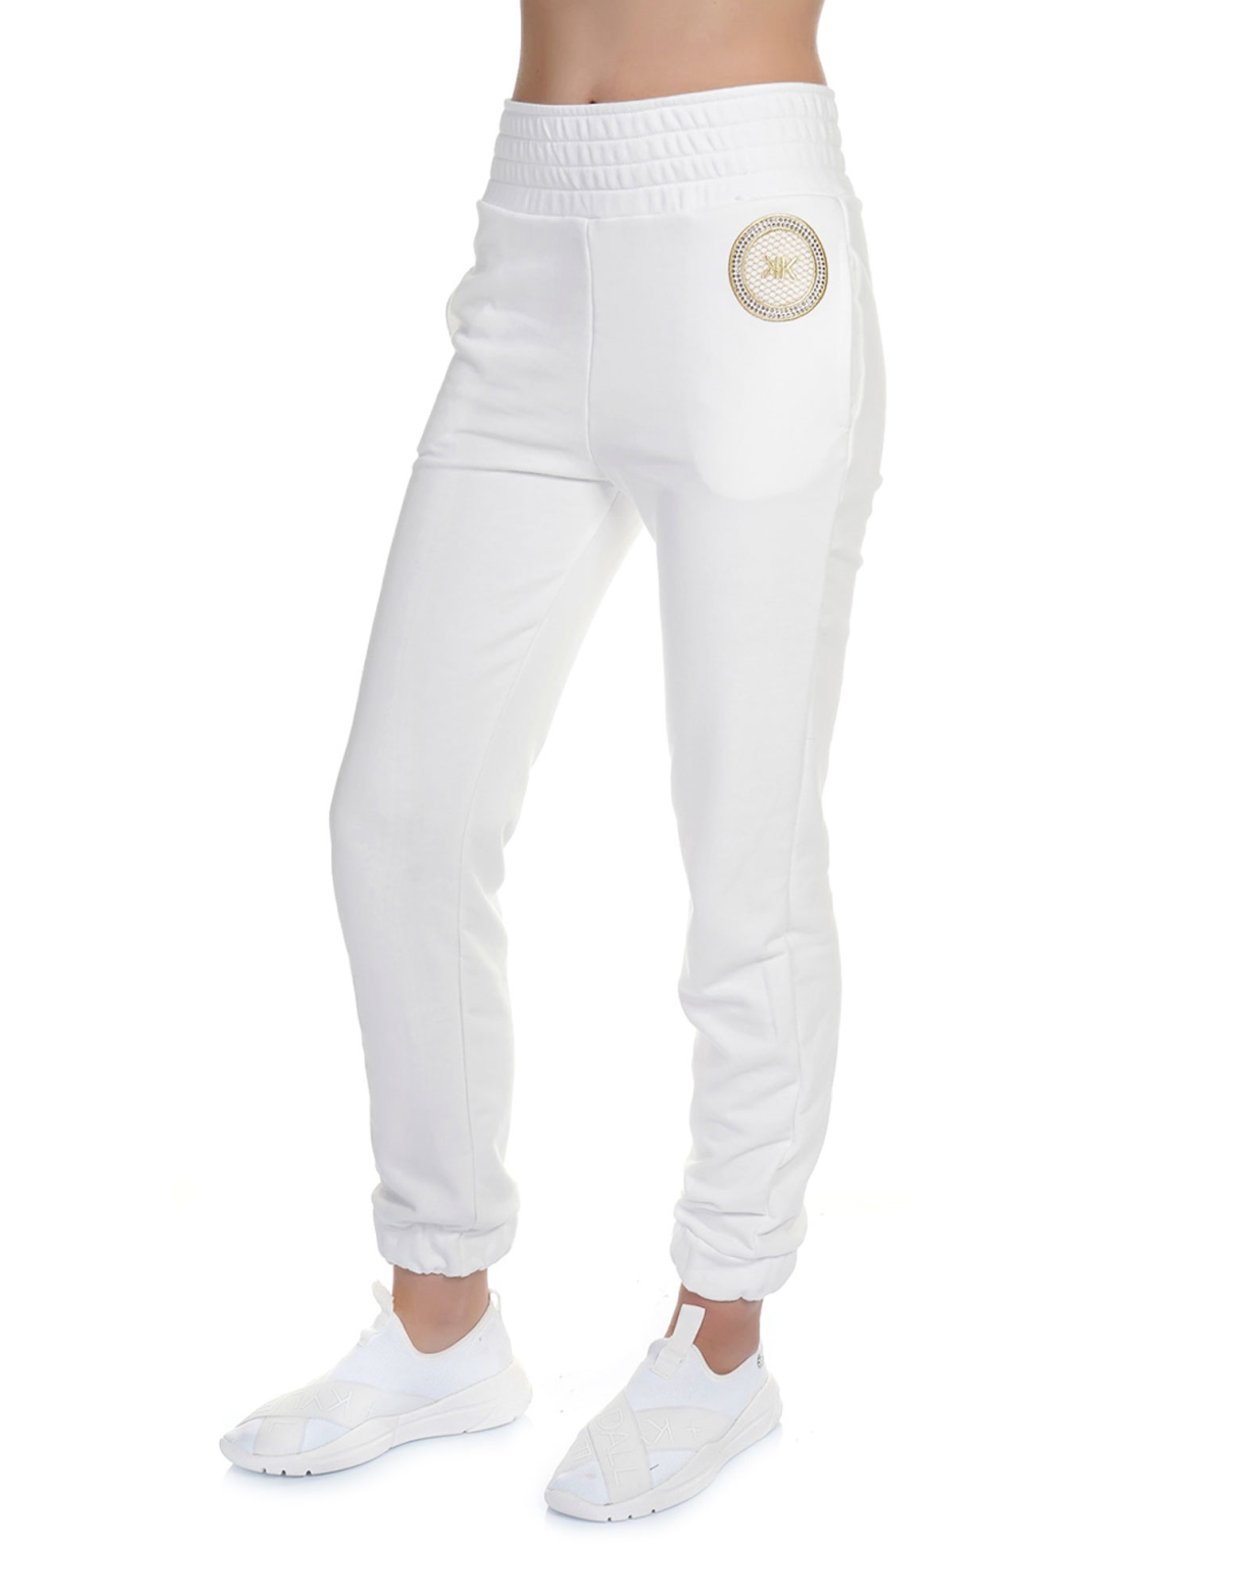 Kendall + Kylie Art pants classic sweatpants off-white